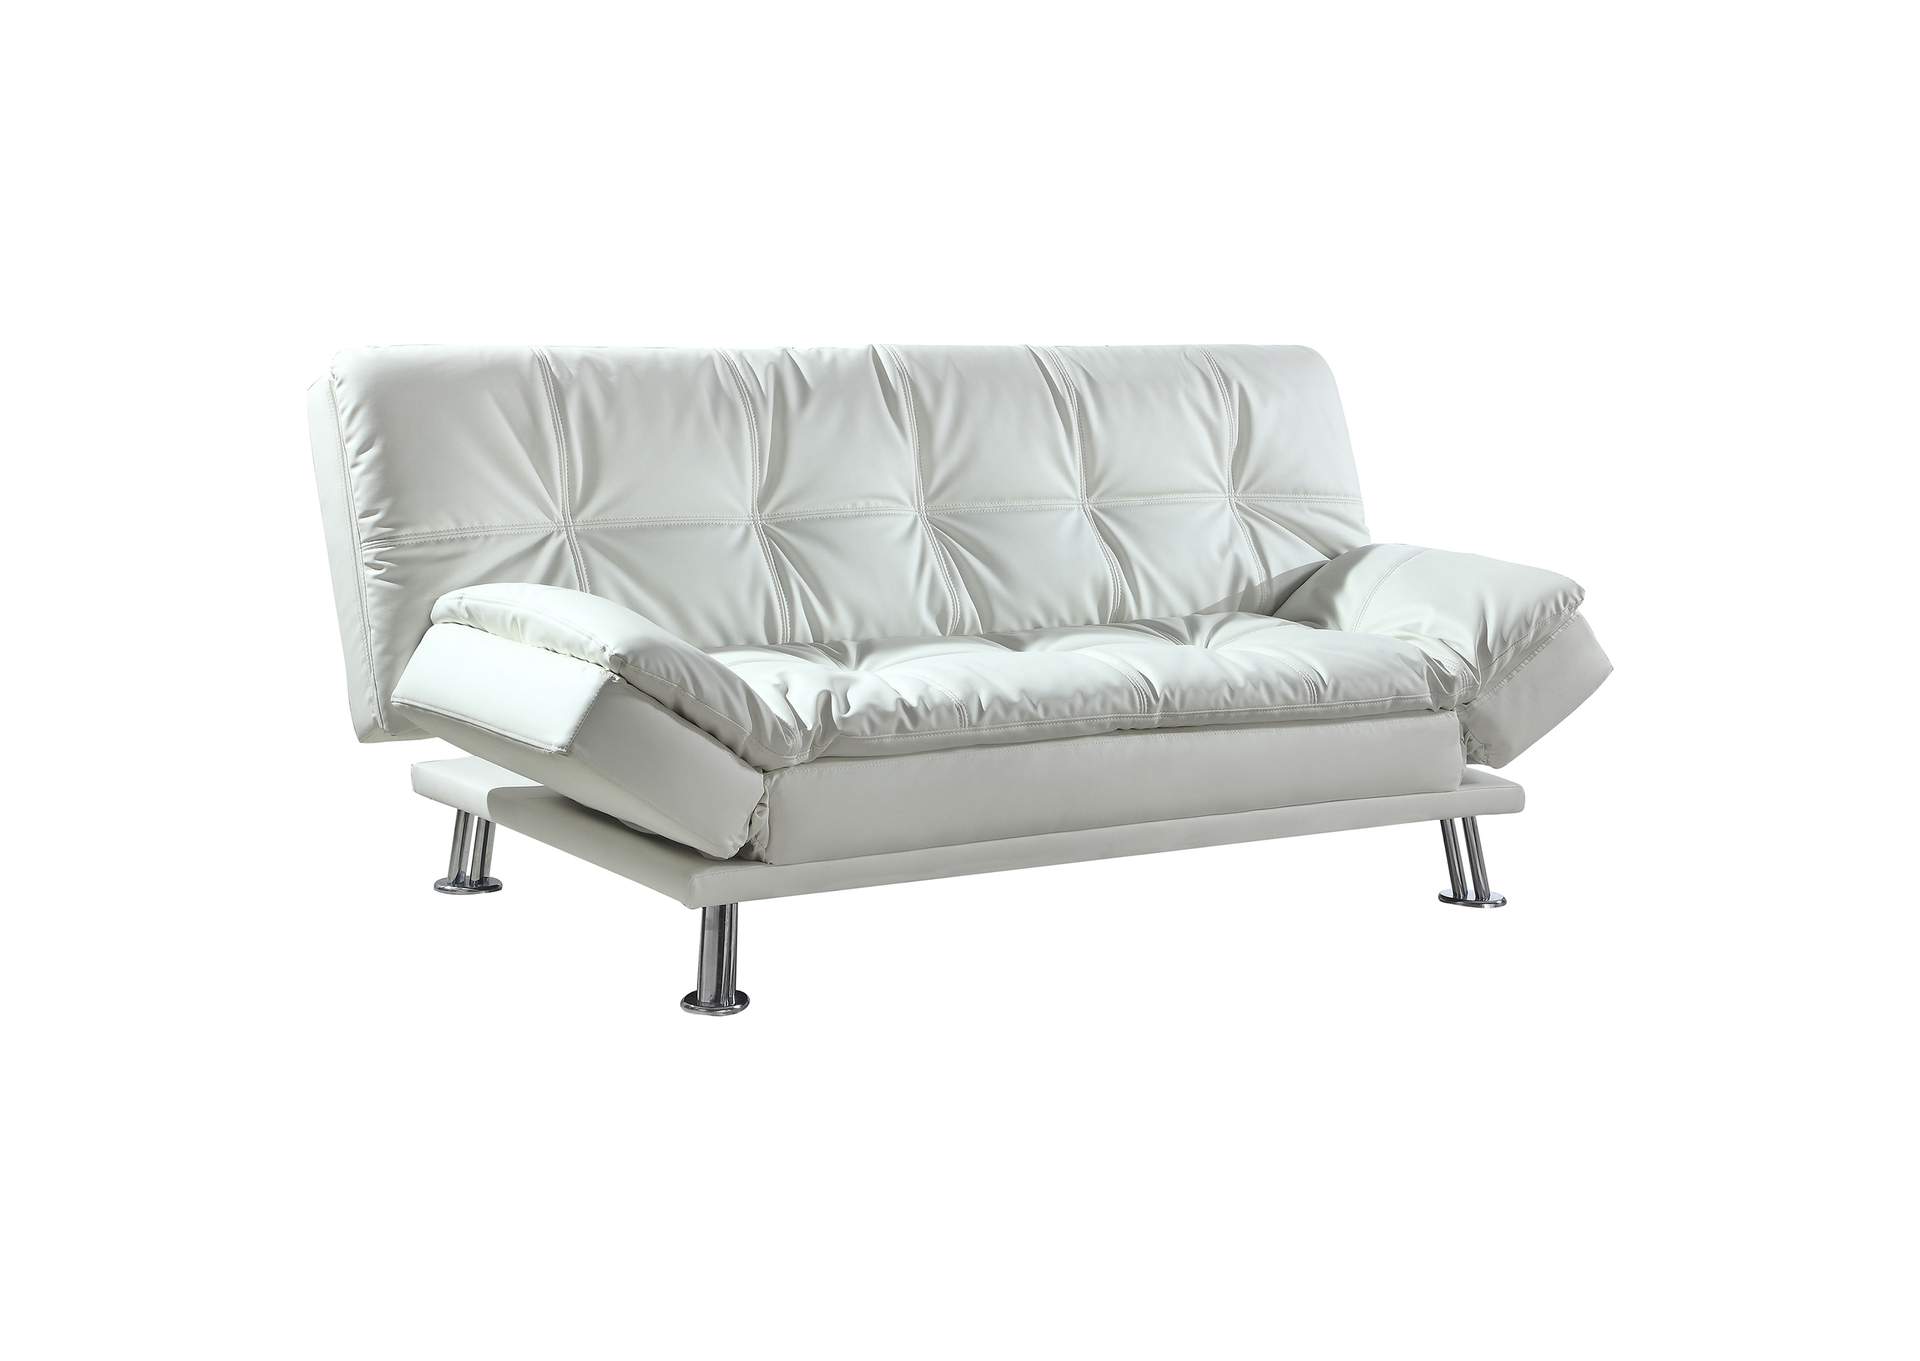 Dilleston Tufted Back Upholstered Sofa Bed White,Coaster Furniture